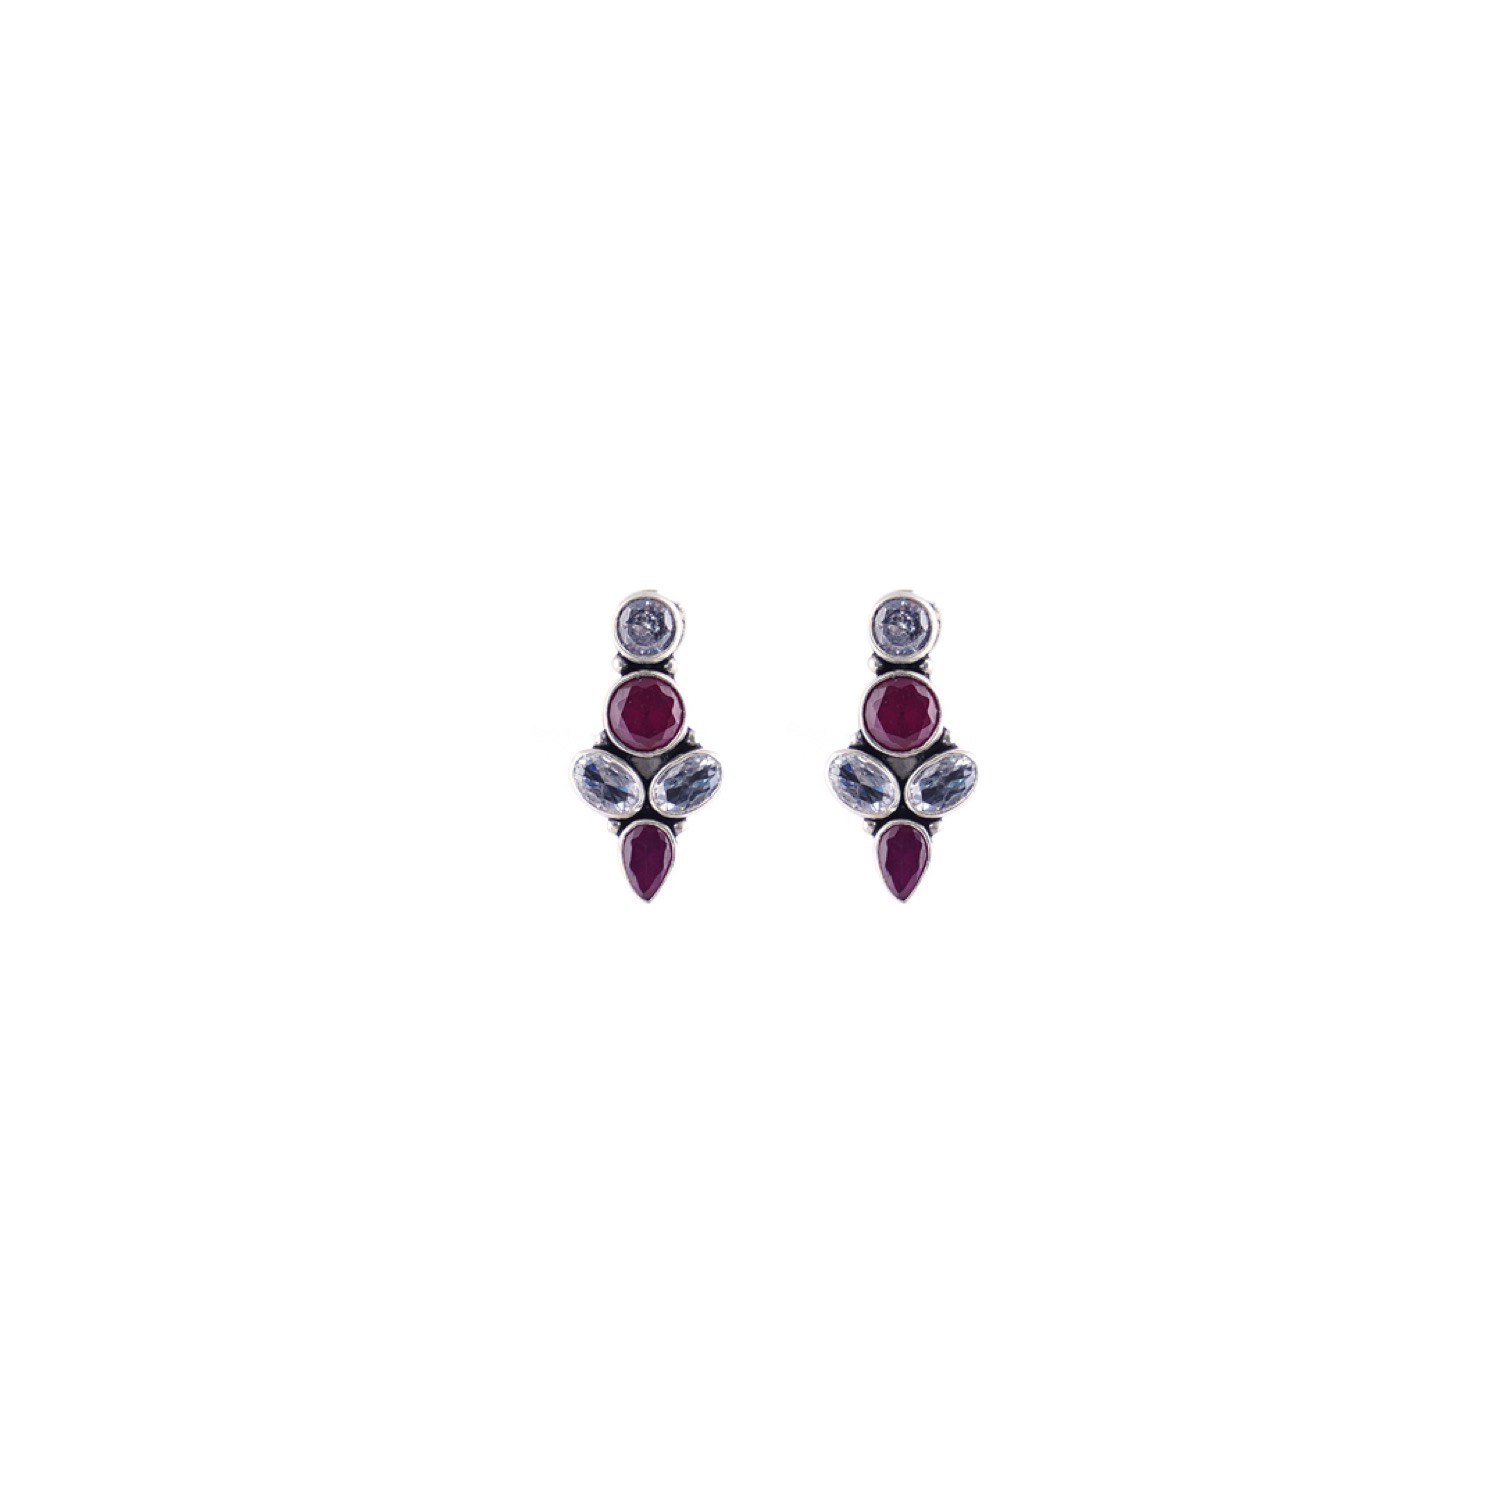 varam_earrings_102022_antique_finish_maroon_and_white_stone_oxidised_silver_earrings-1